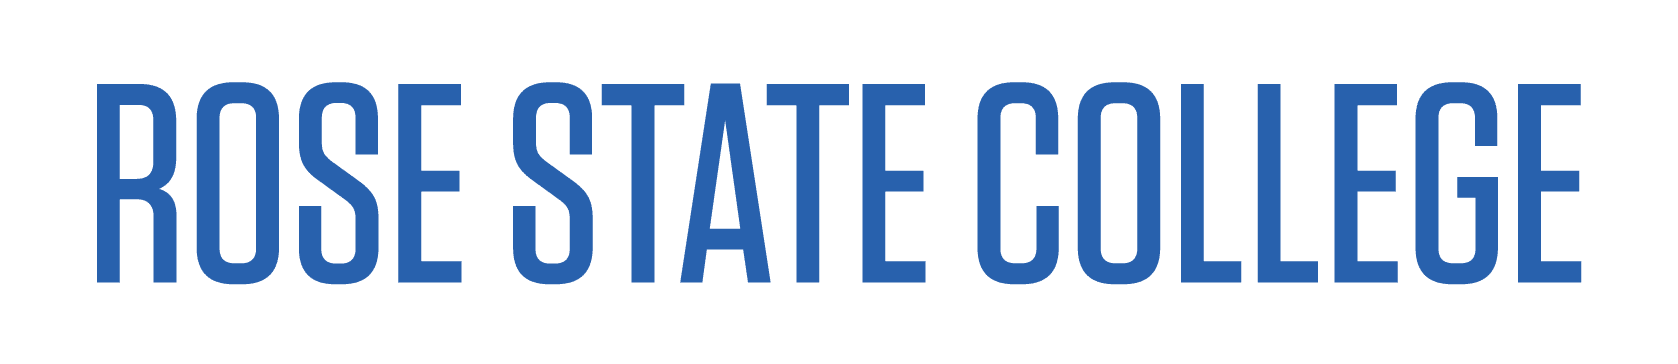 Rose State College Logo